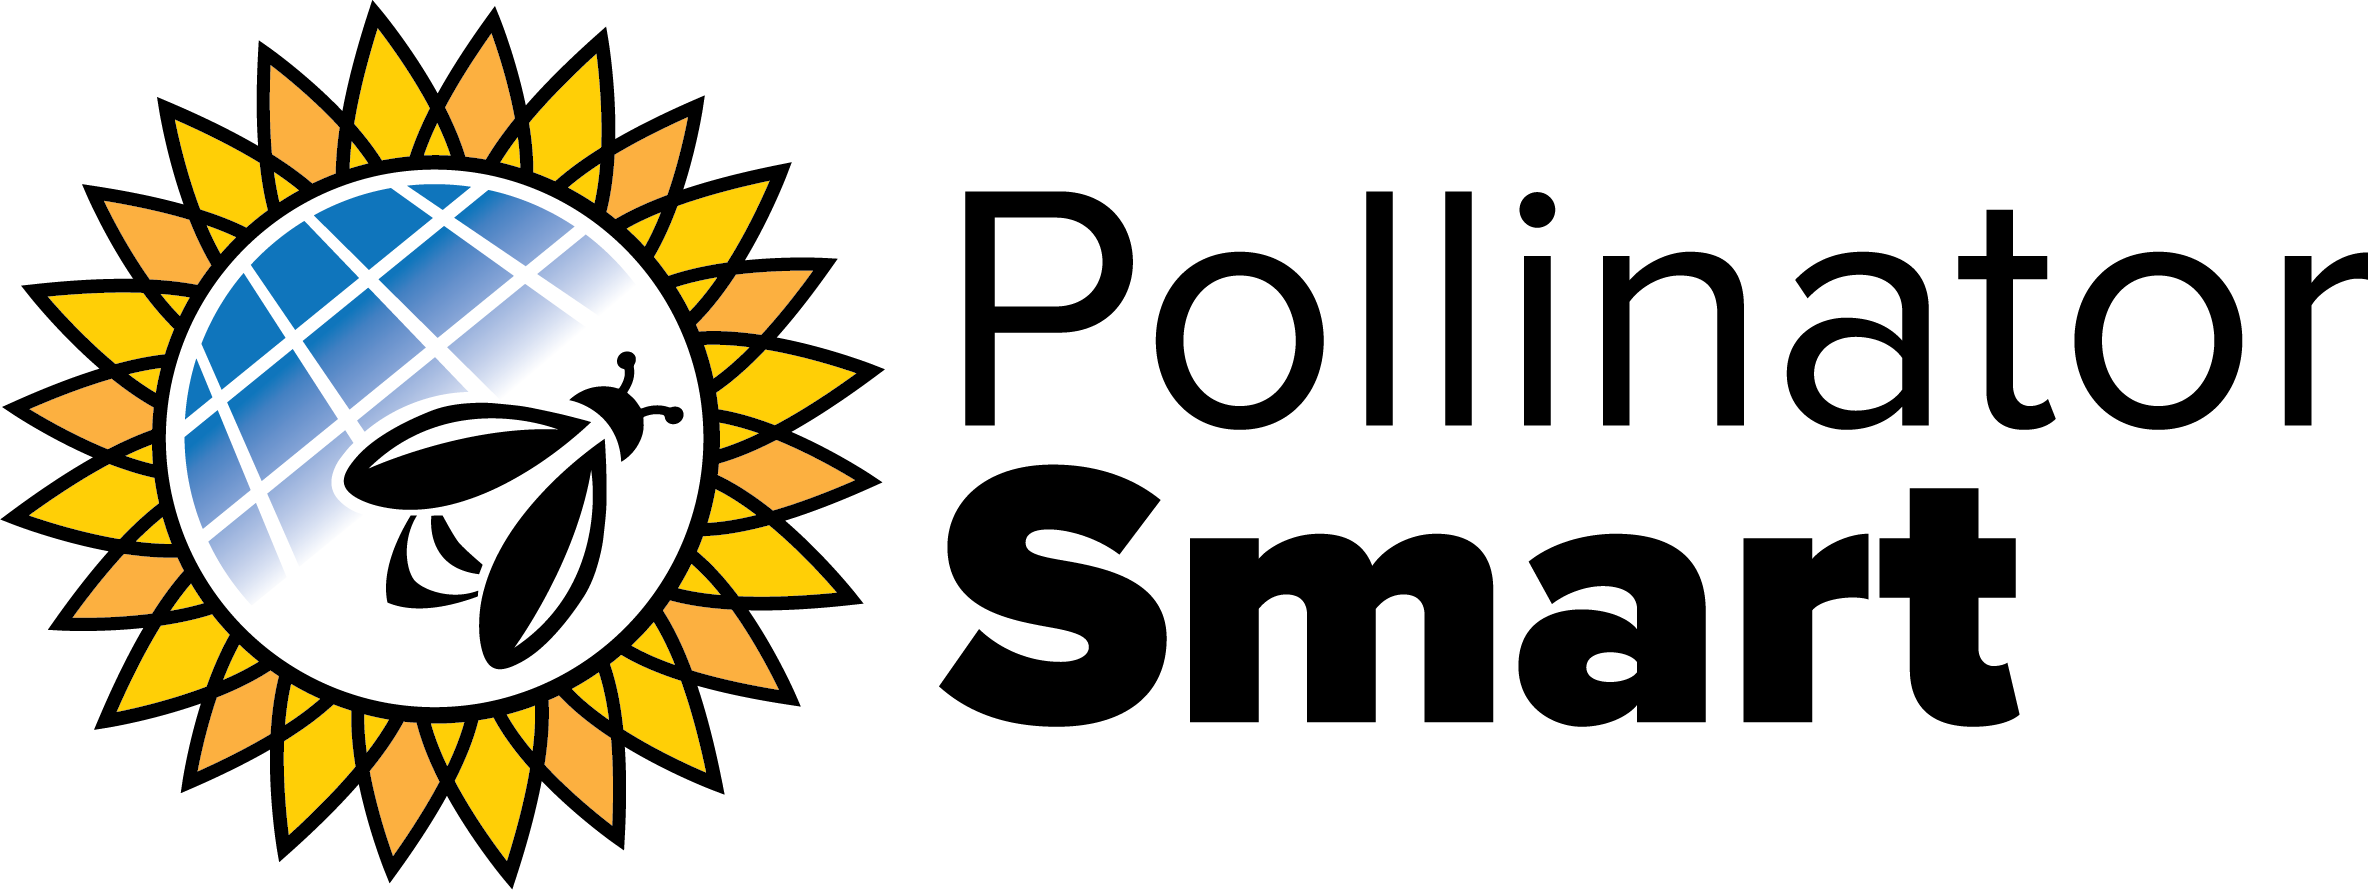 pollinator smart logo